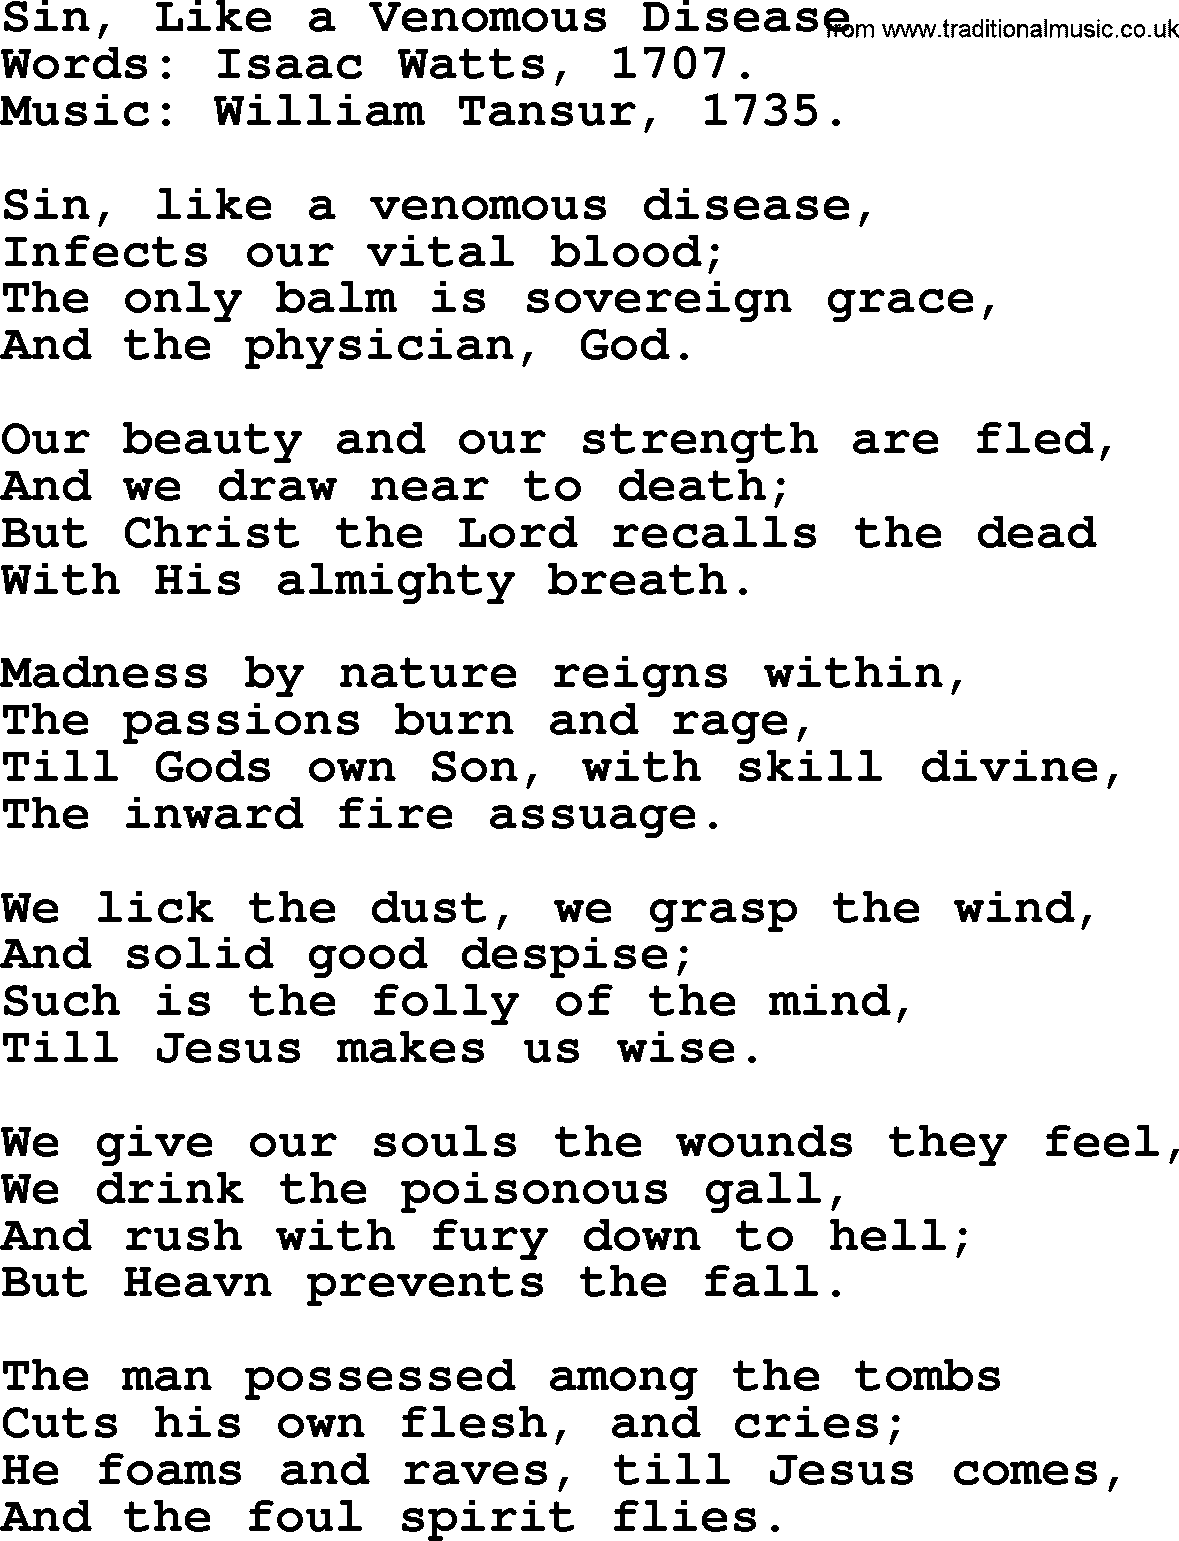 Isaac Watts Christian hymn: Sin, Like a Venomous Disease- lyricss